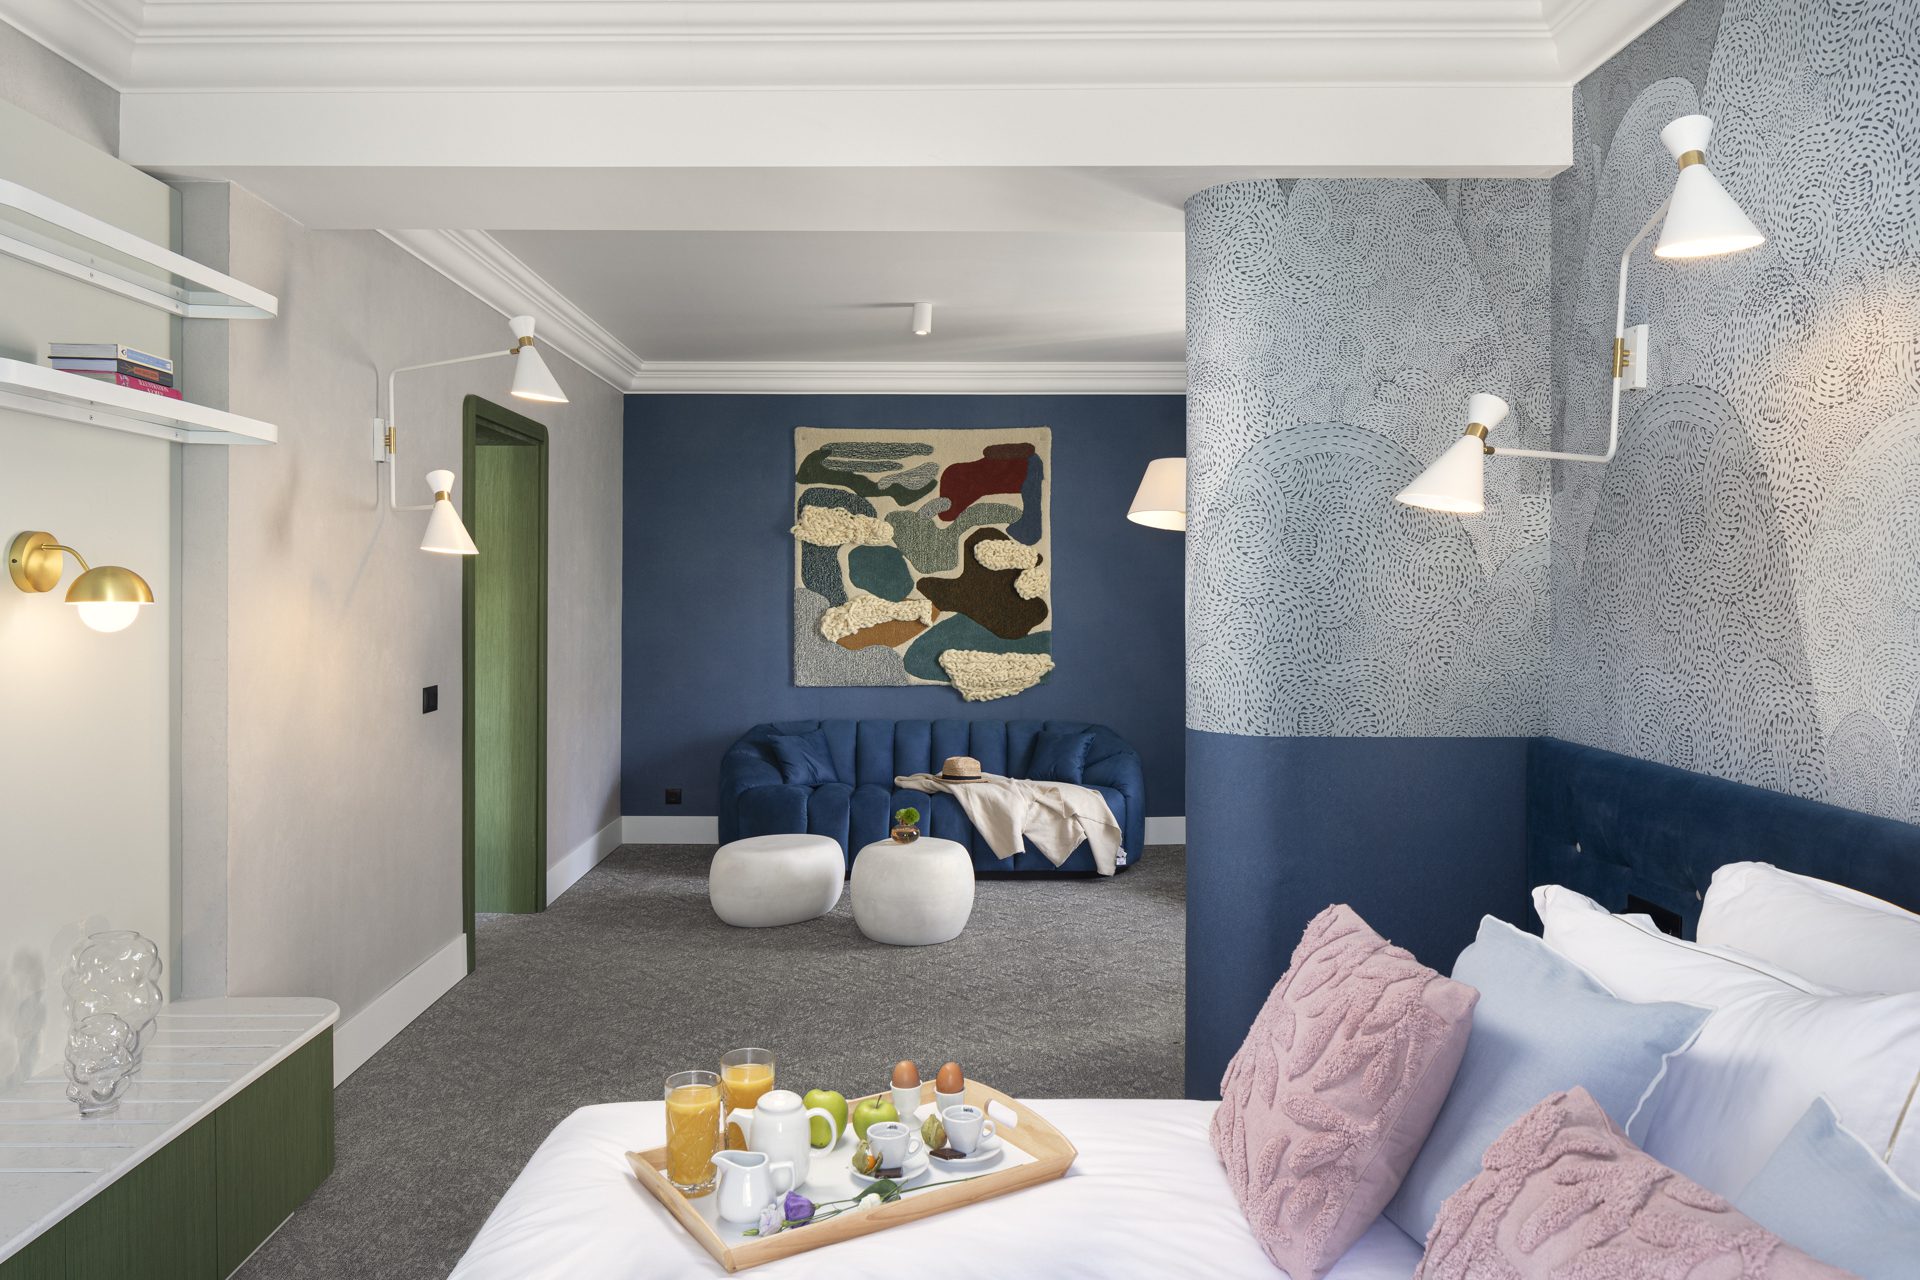 Luxurious hotel room interior with blue and white decor at Oborishte 63 Hotel in Sofia, Bulgaria